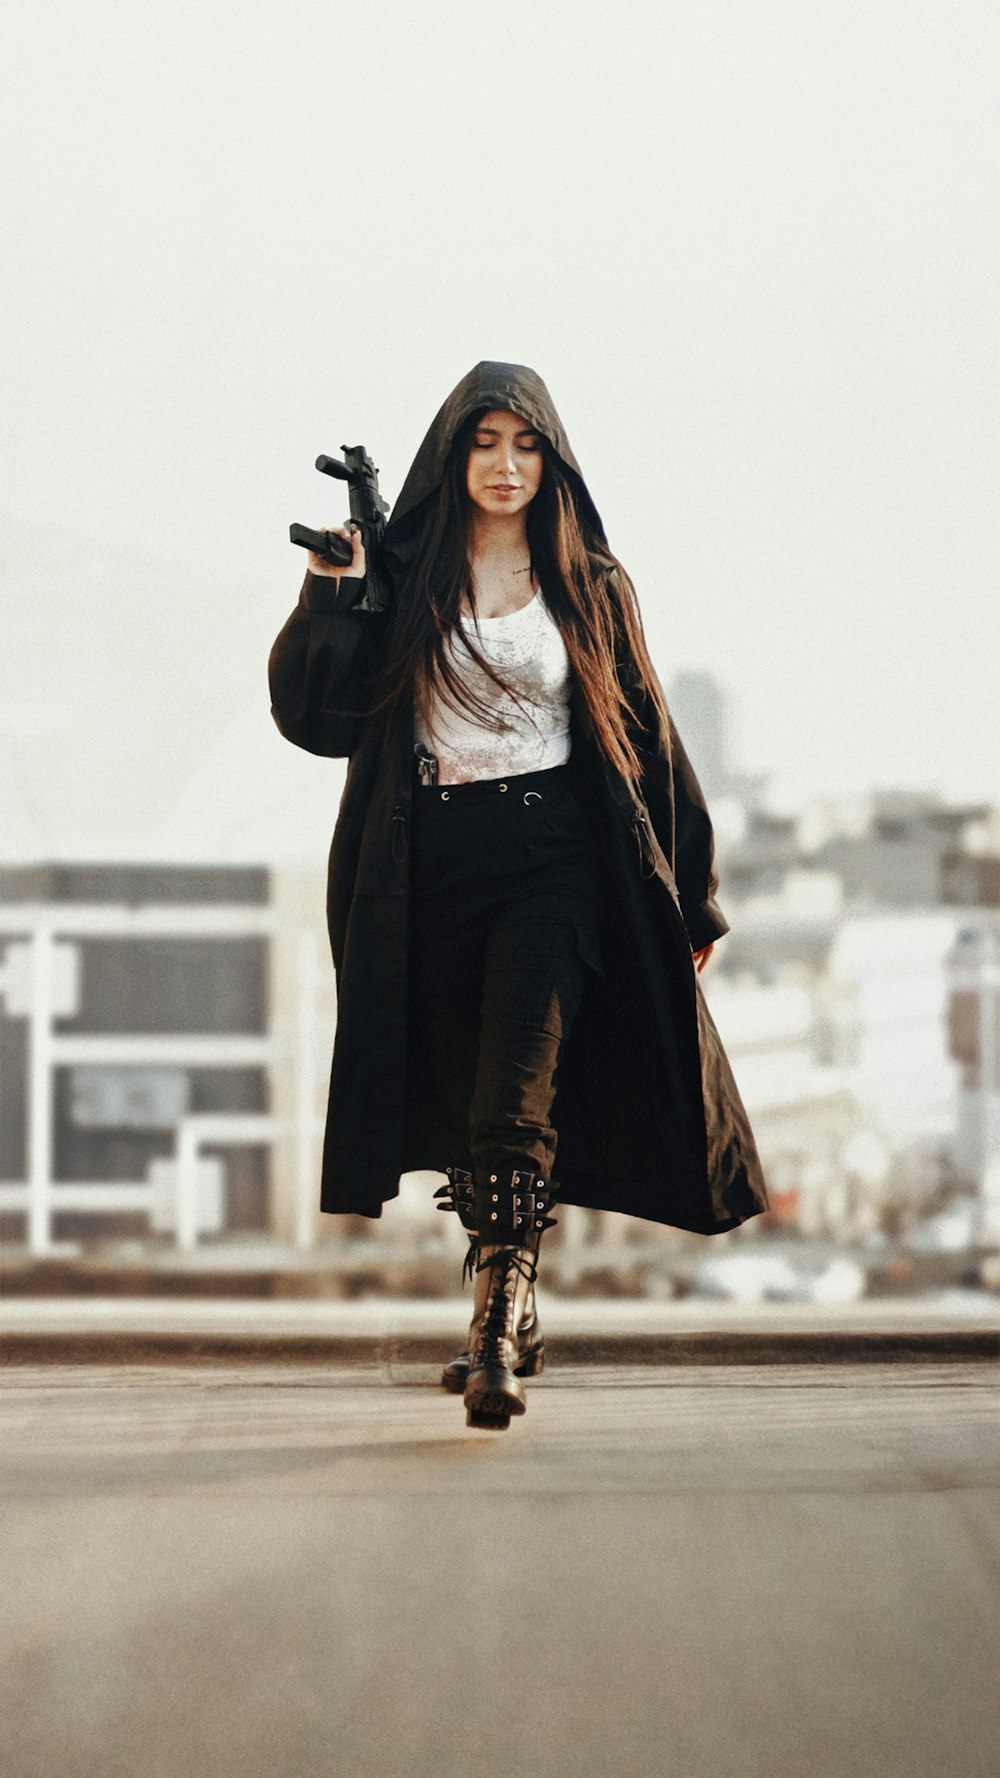 a woman walking down a street holding a gun